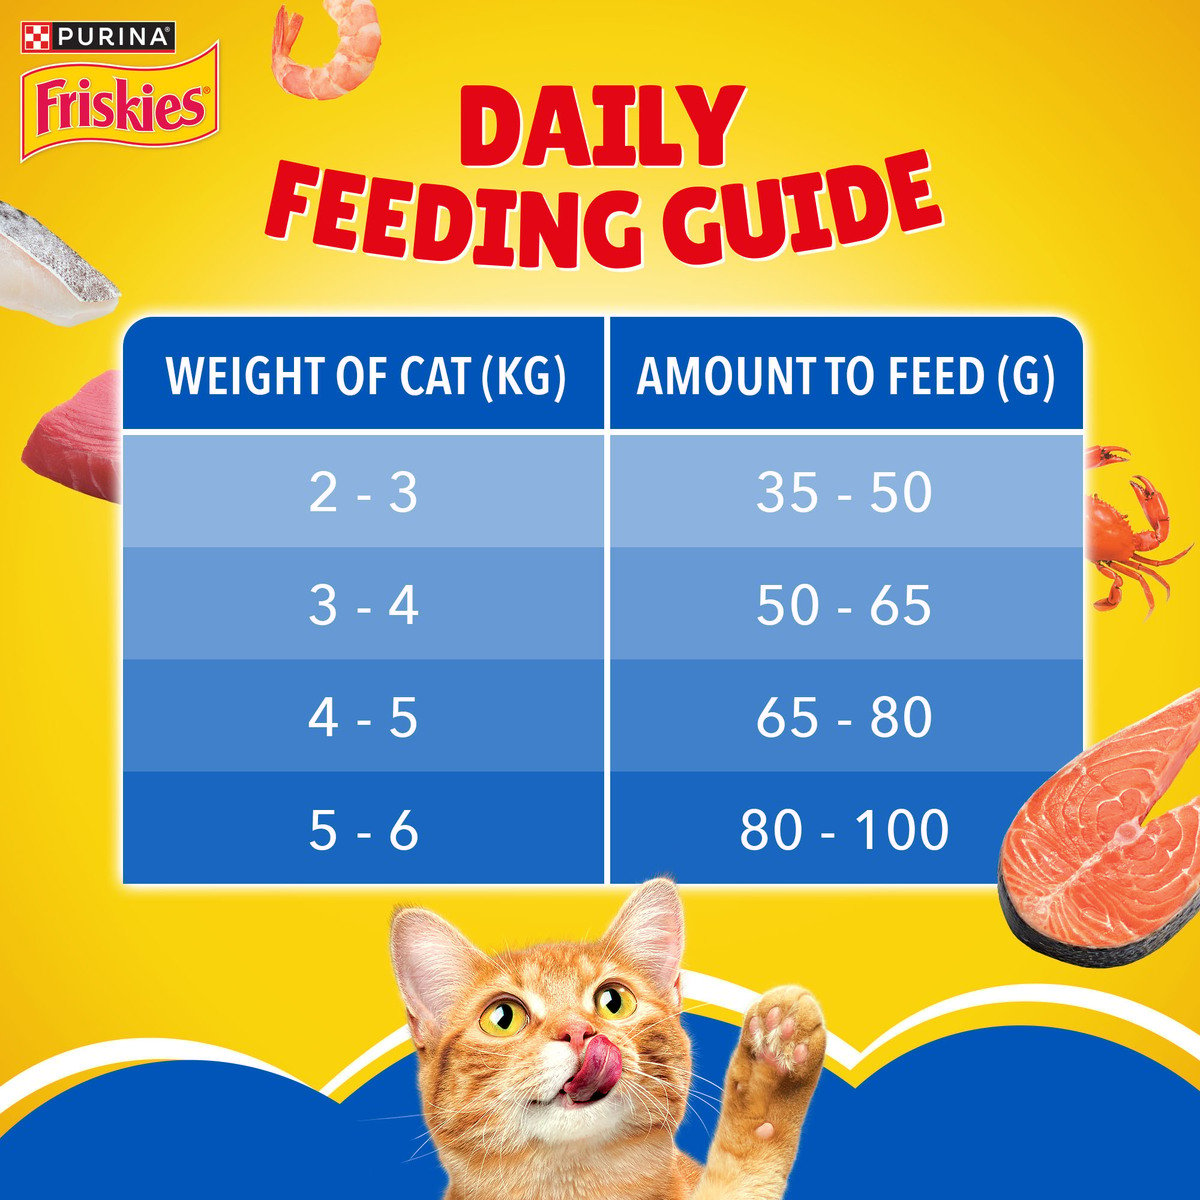 Purina Friskies Cat Food Seafood Sensation Cat Food 2.5 kg